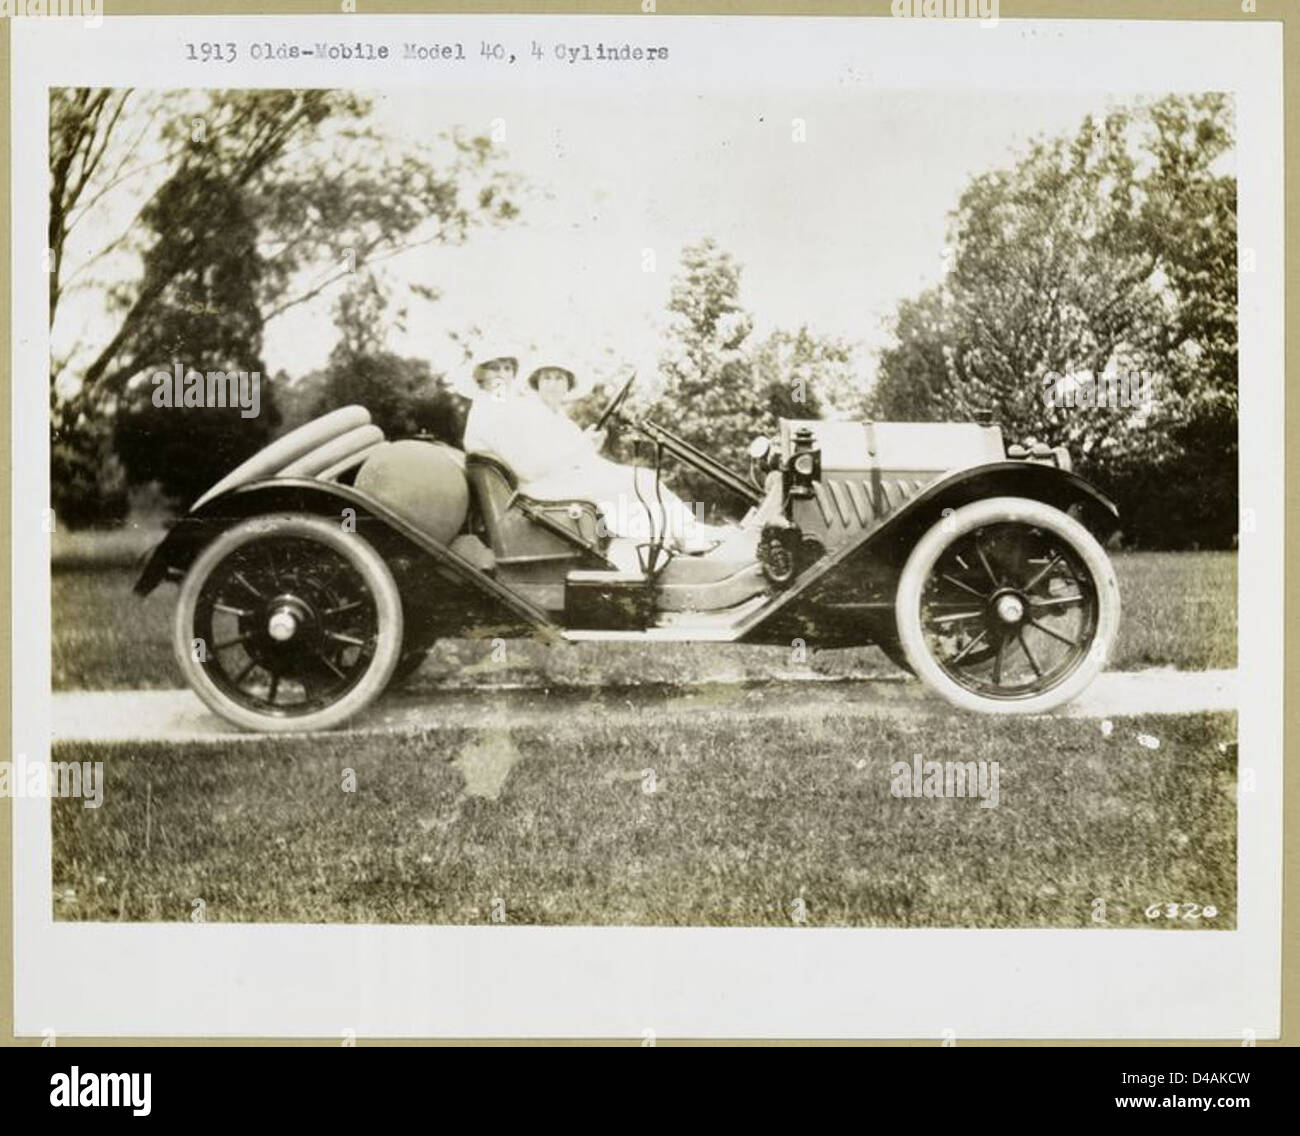 1913 - Oldsmobile Modell 40, 4 Zylinder. Stockfoto